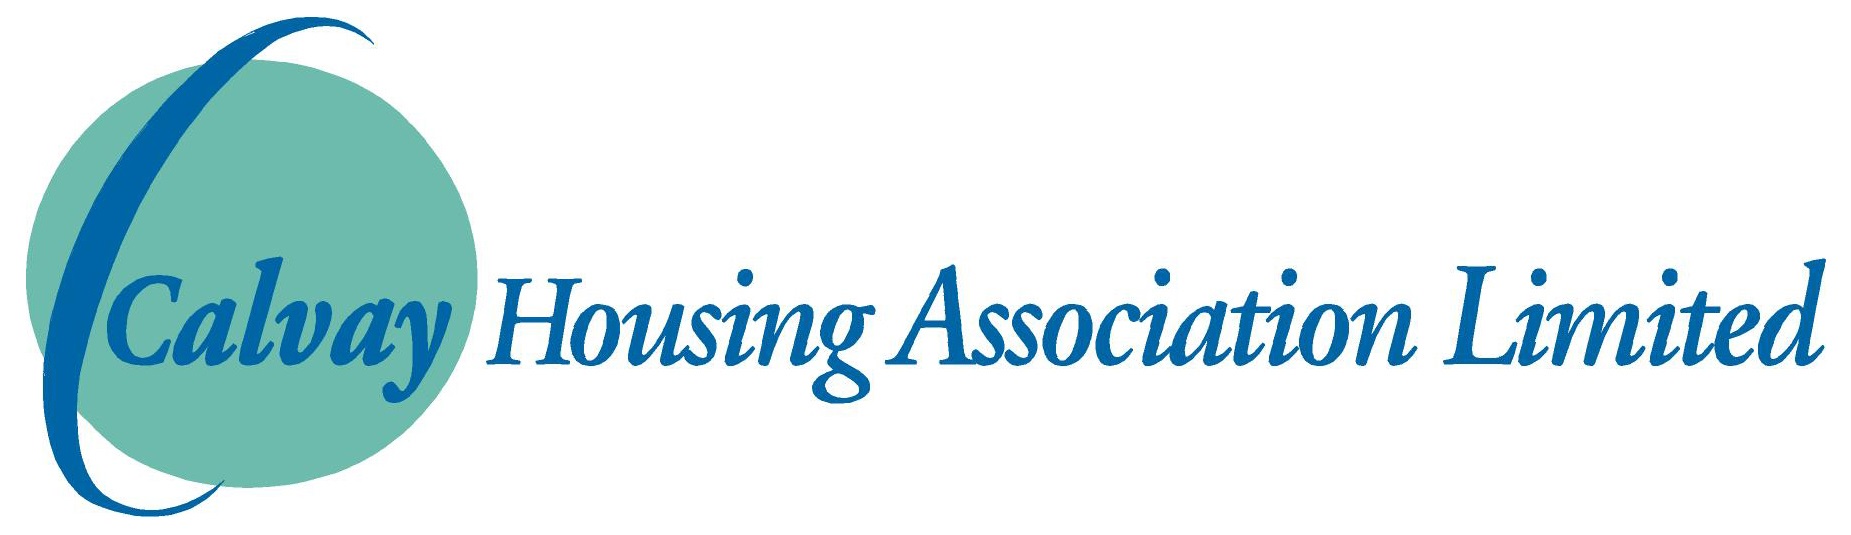 Calvay Housing Association Ltd